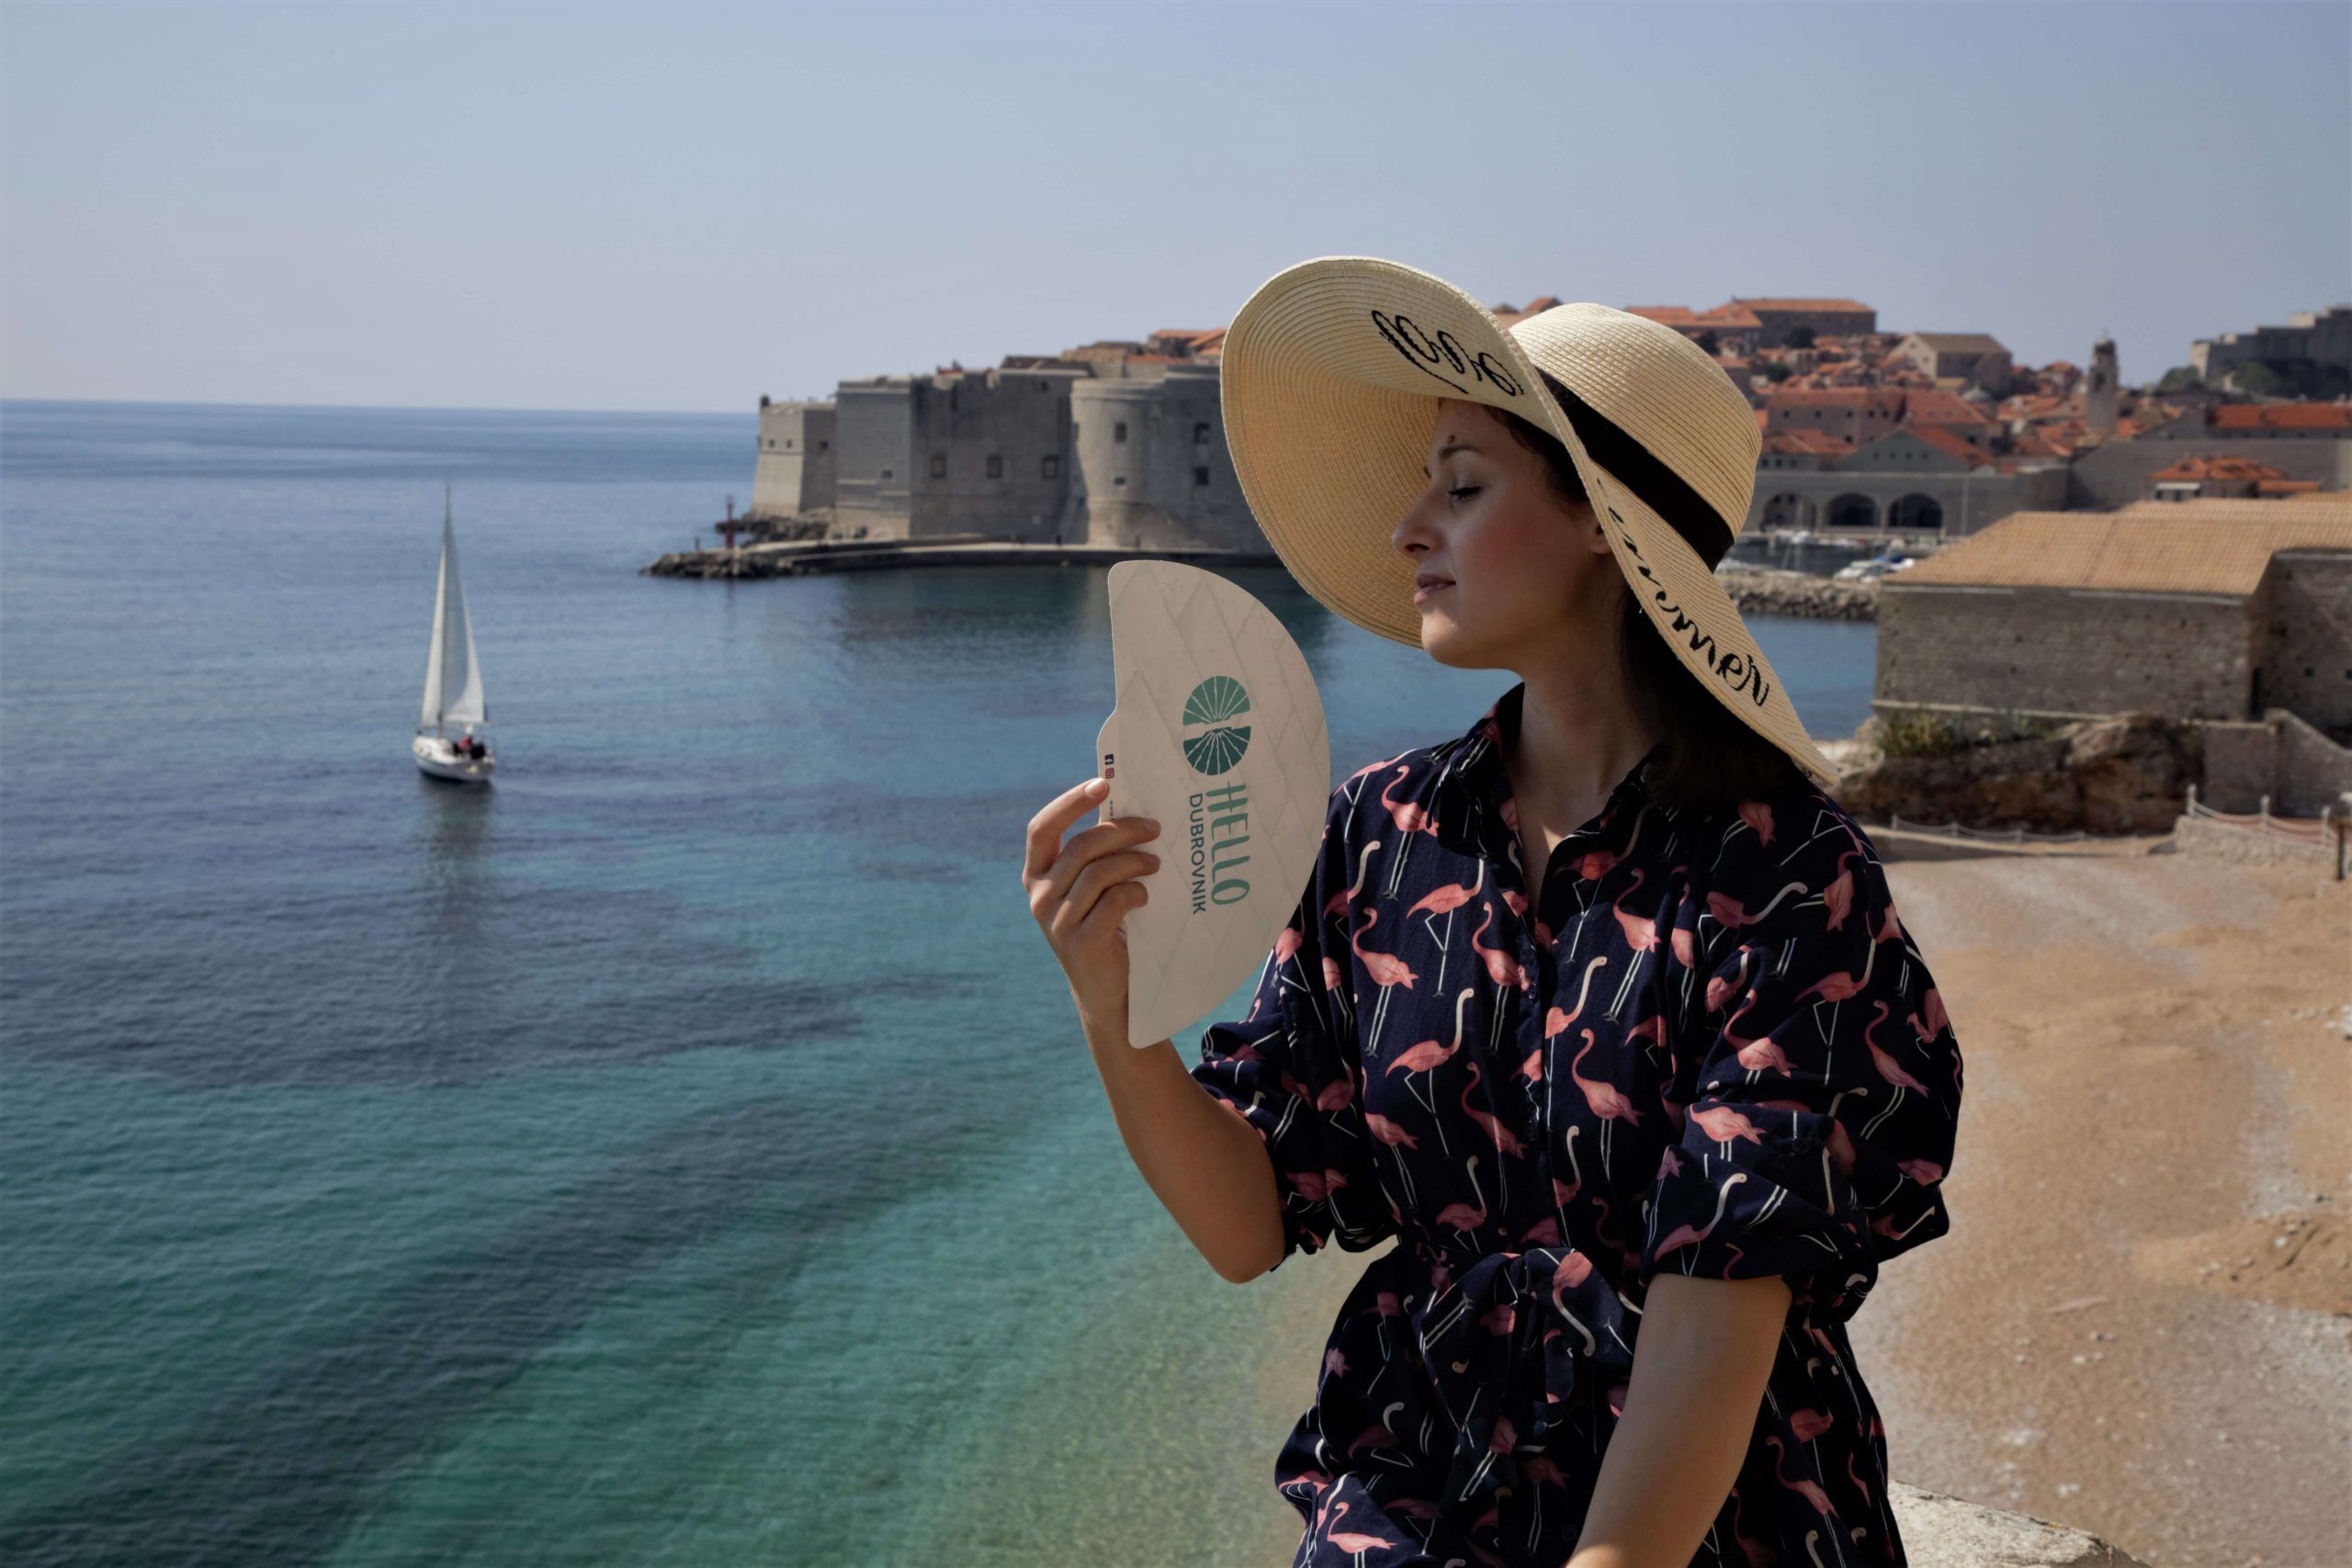 2. Travel and the Coronavirus Post-COVID-19 in Dubrovnik